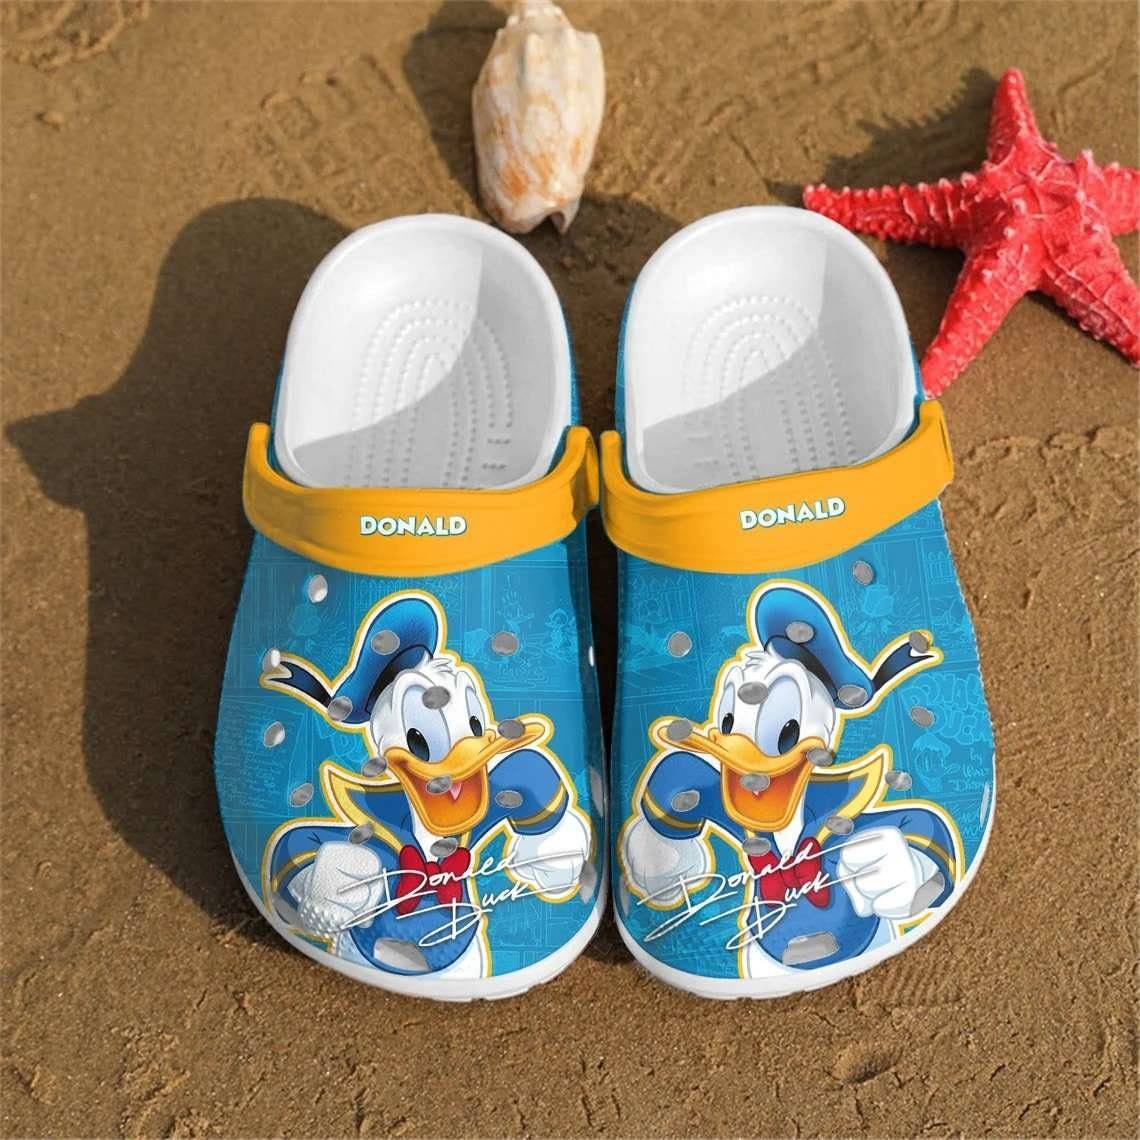 Donald Duck Cartoon Clogs, Crocs Crocband Clogs Comfy Footwear Shoes